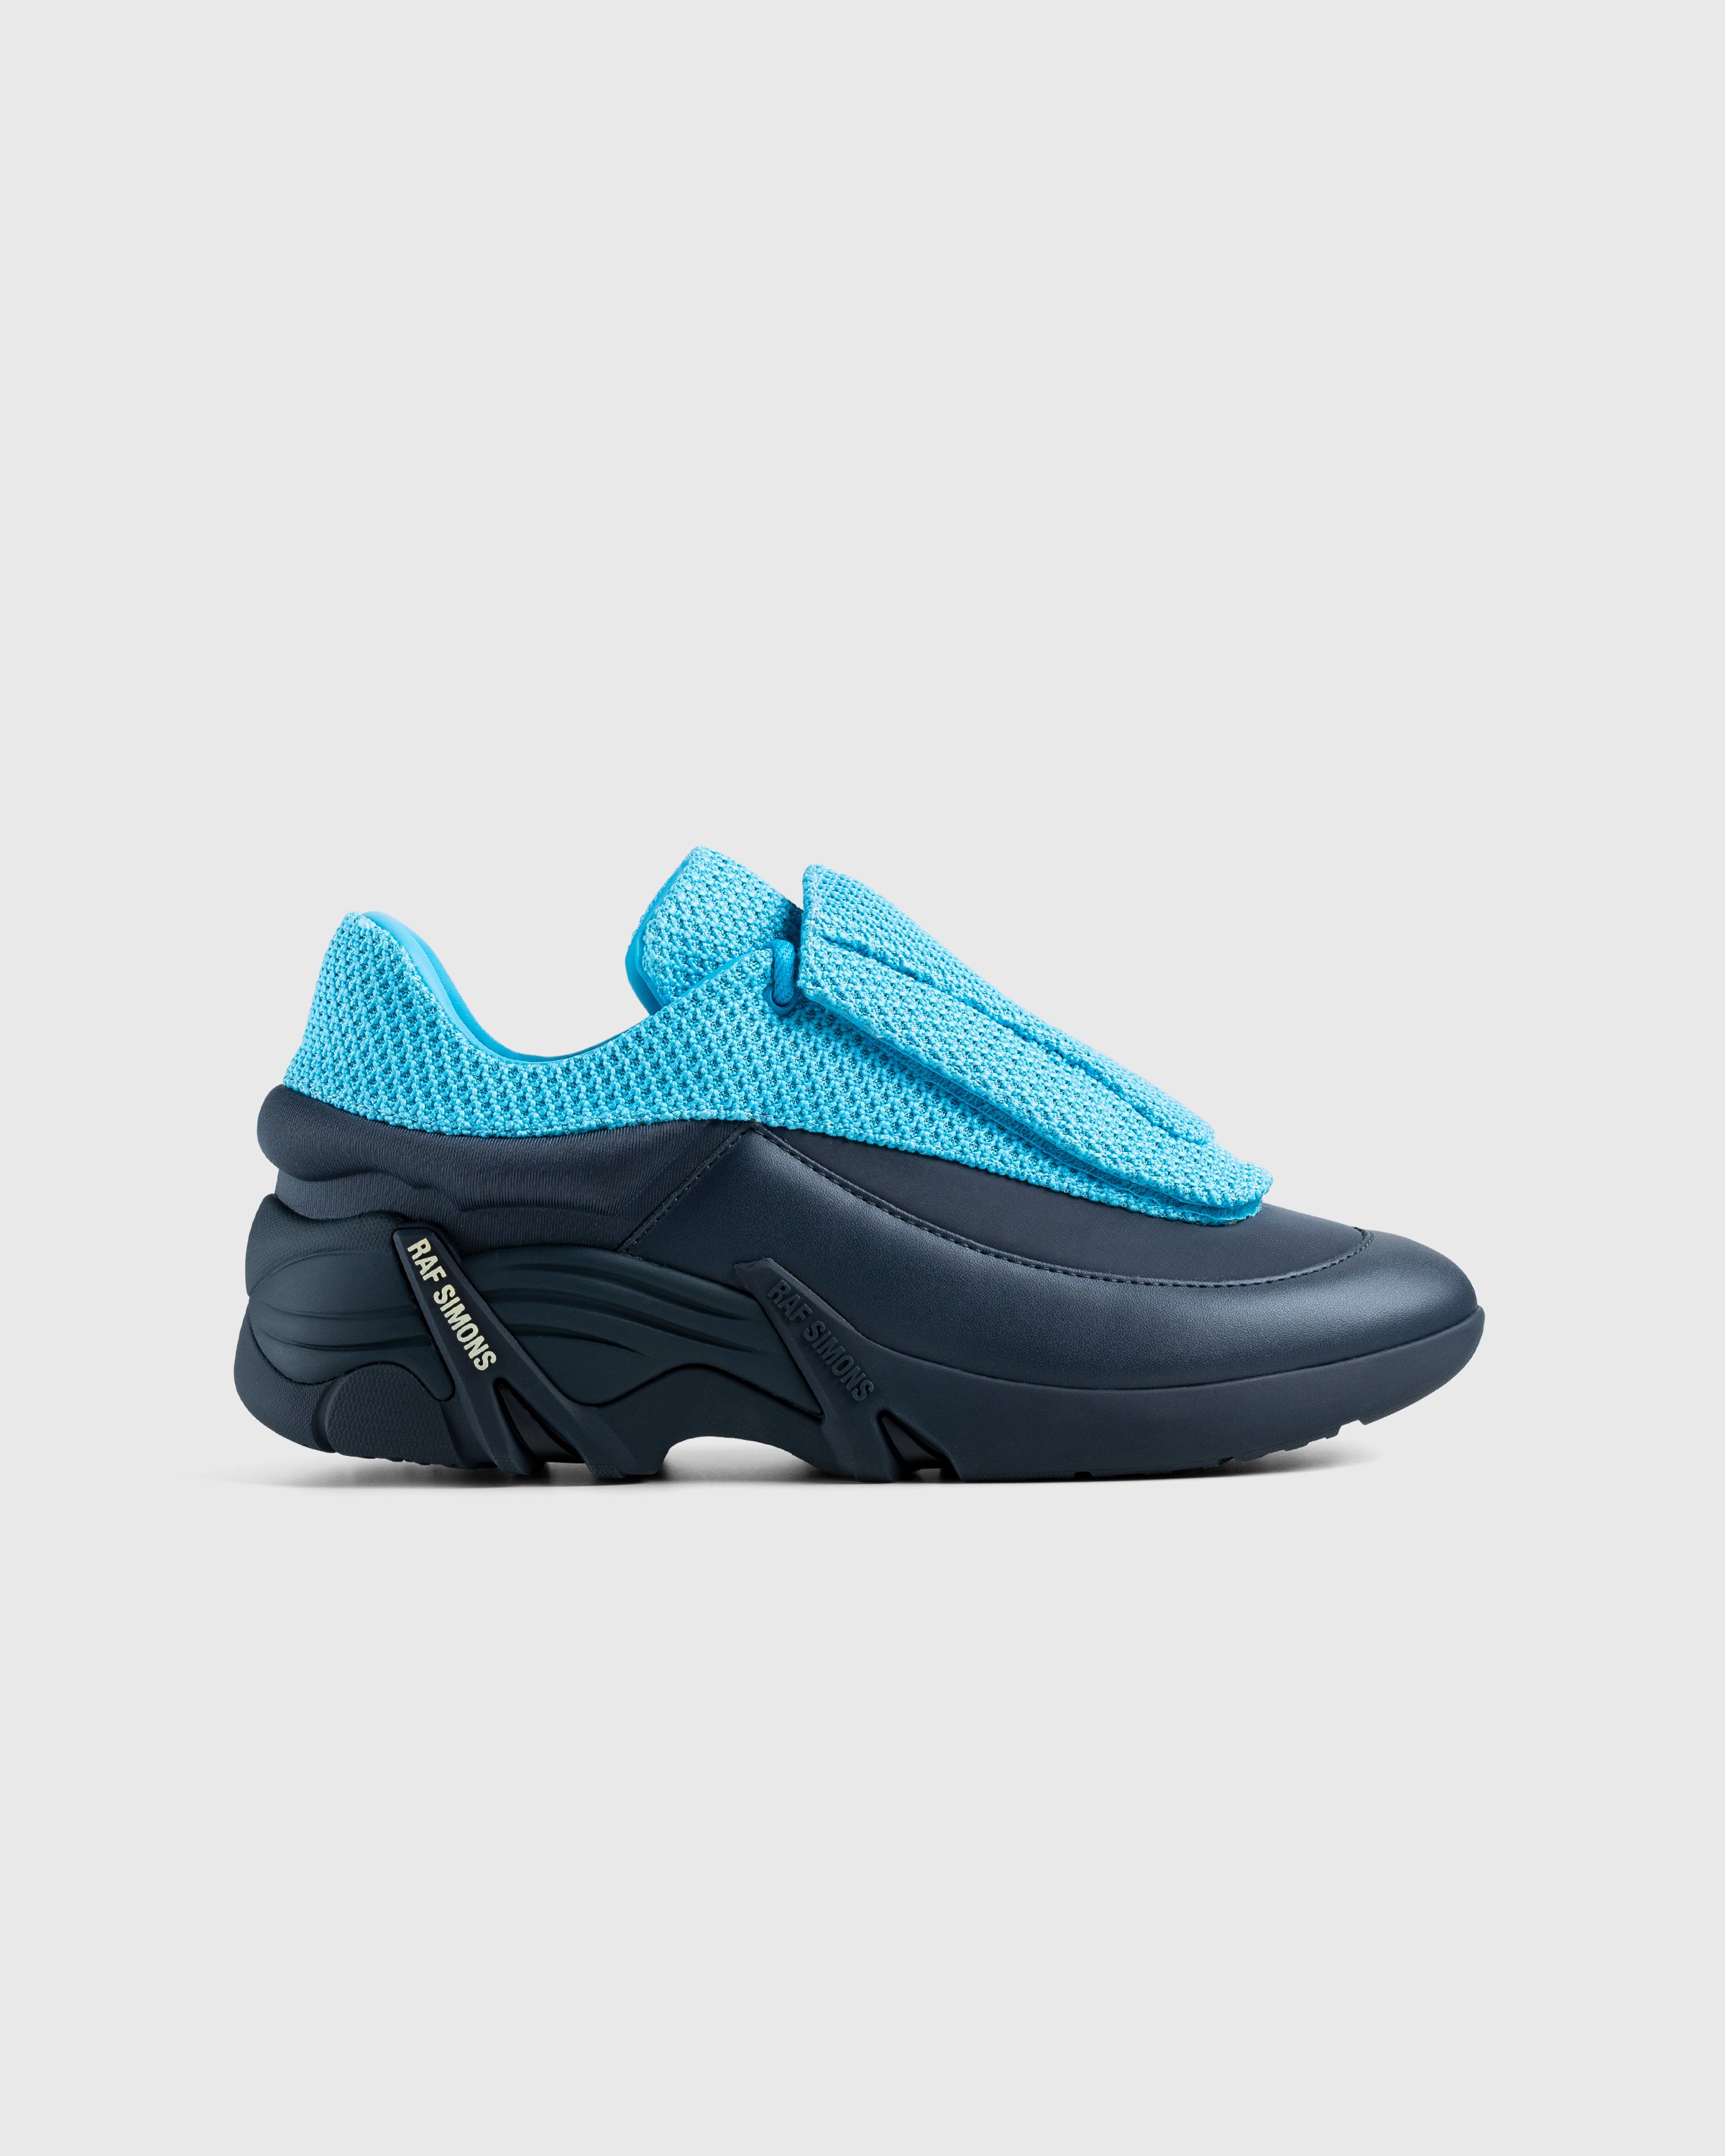 Raf Simons - Antei Aqua - Footwear - Blue - Image 1